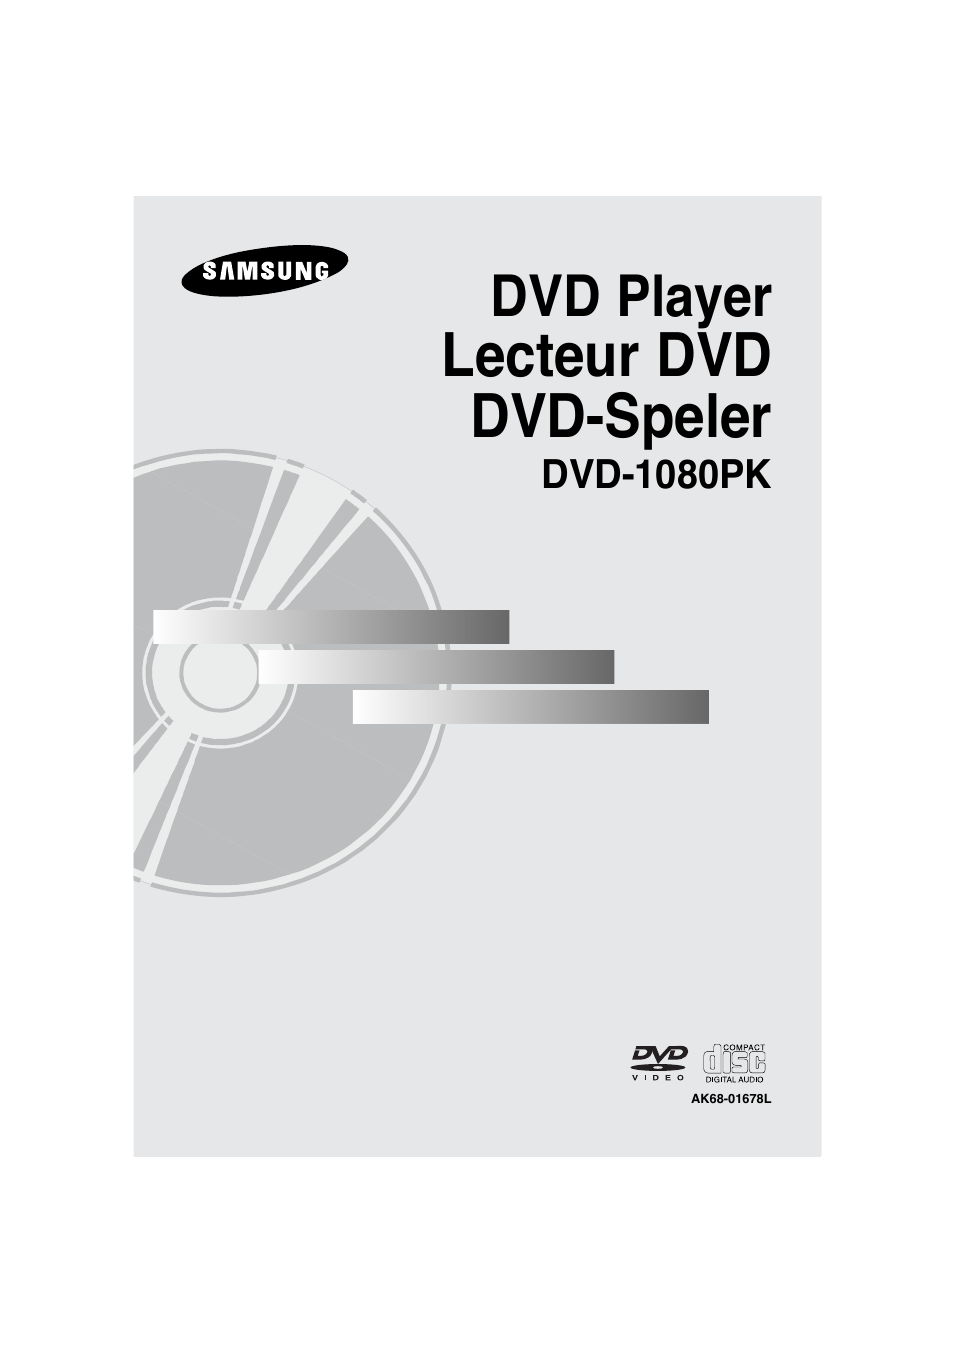 DVD-1080PK